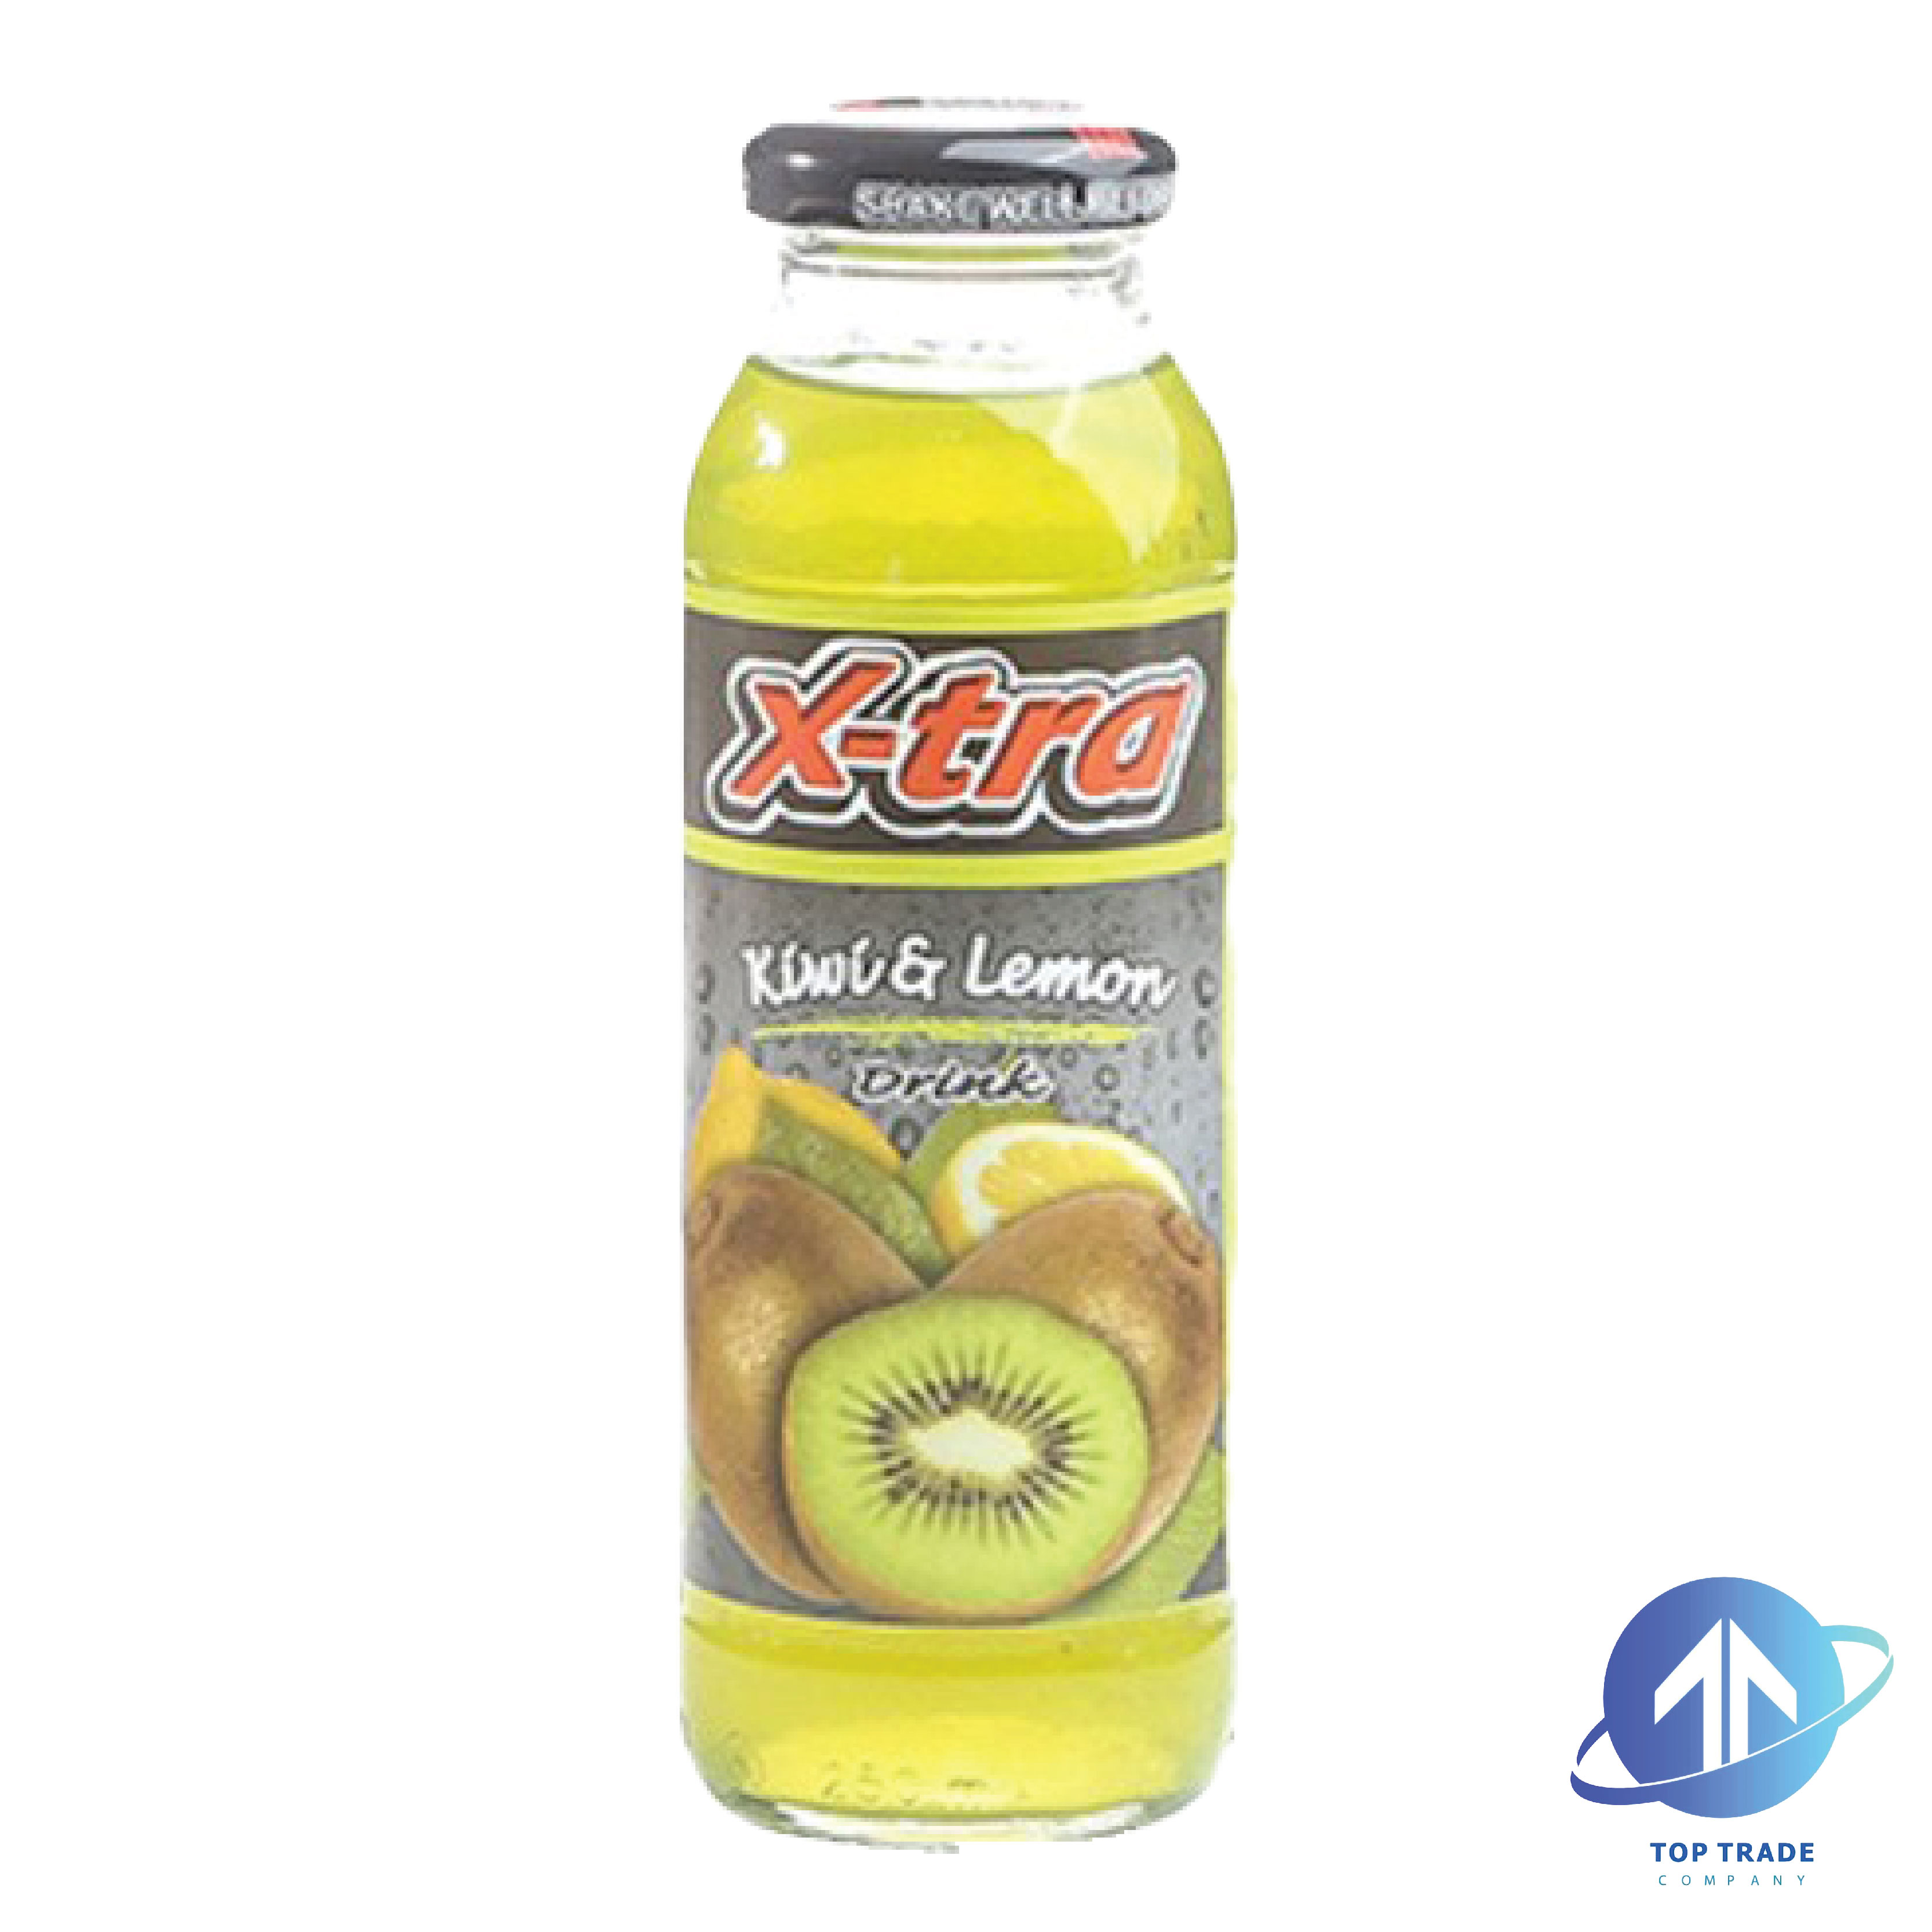 X-tra kiwi & lemon Juice 250ml